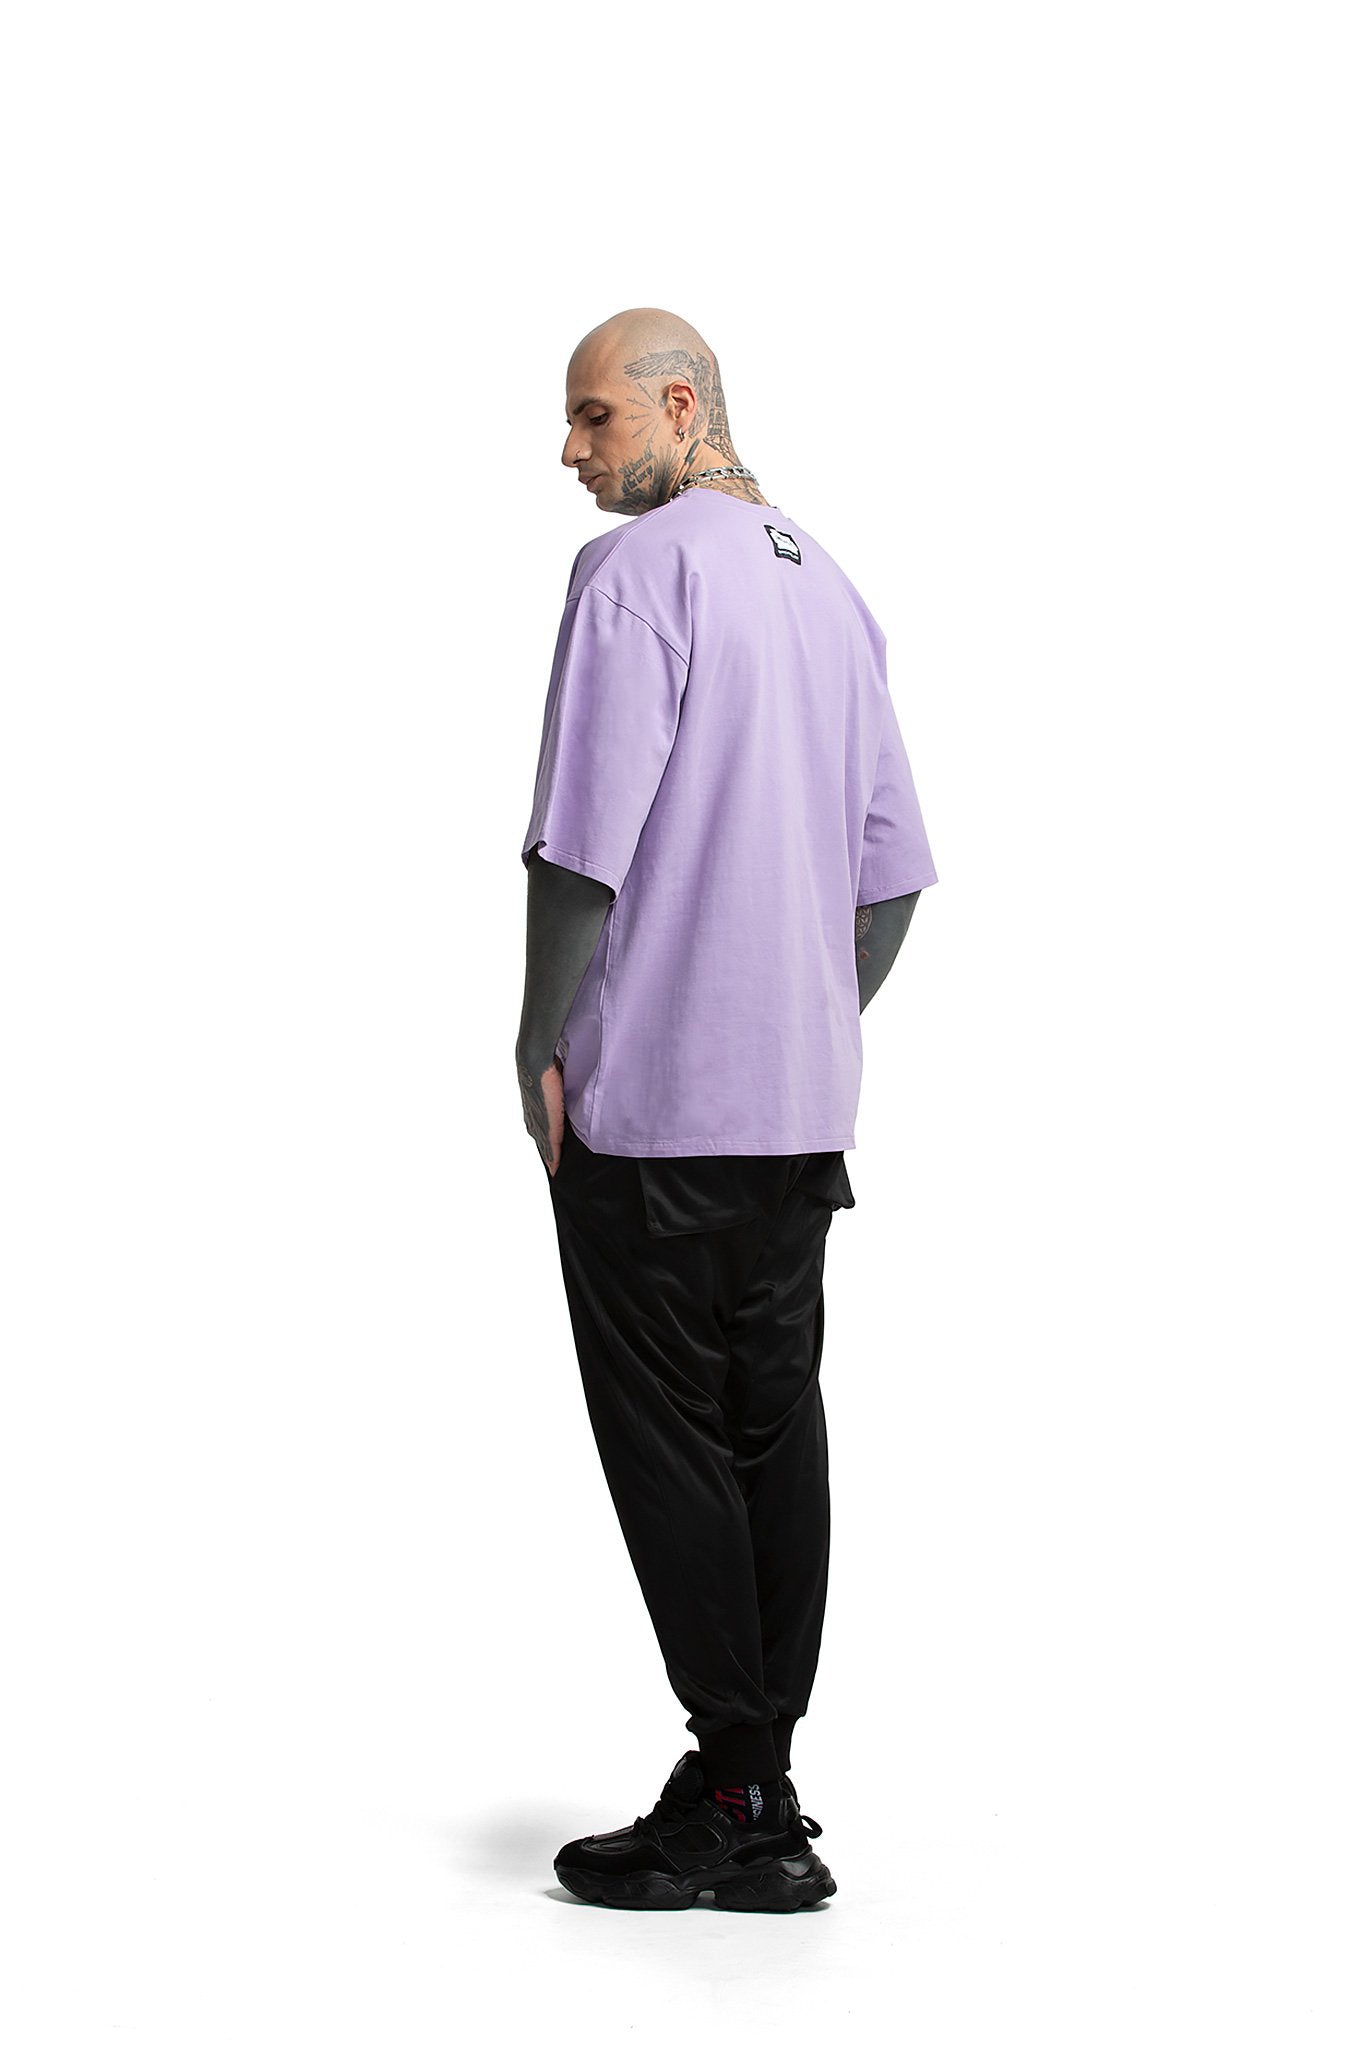 Techno Dragon übergroßes Unisex-T-Shirt [lila]